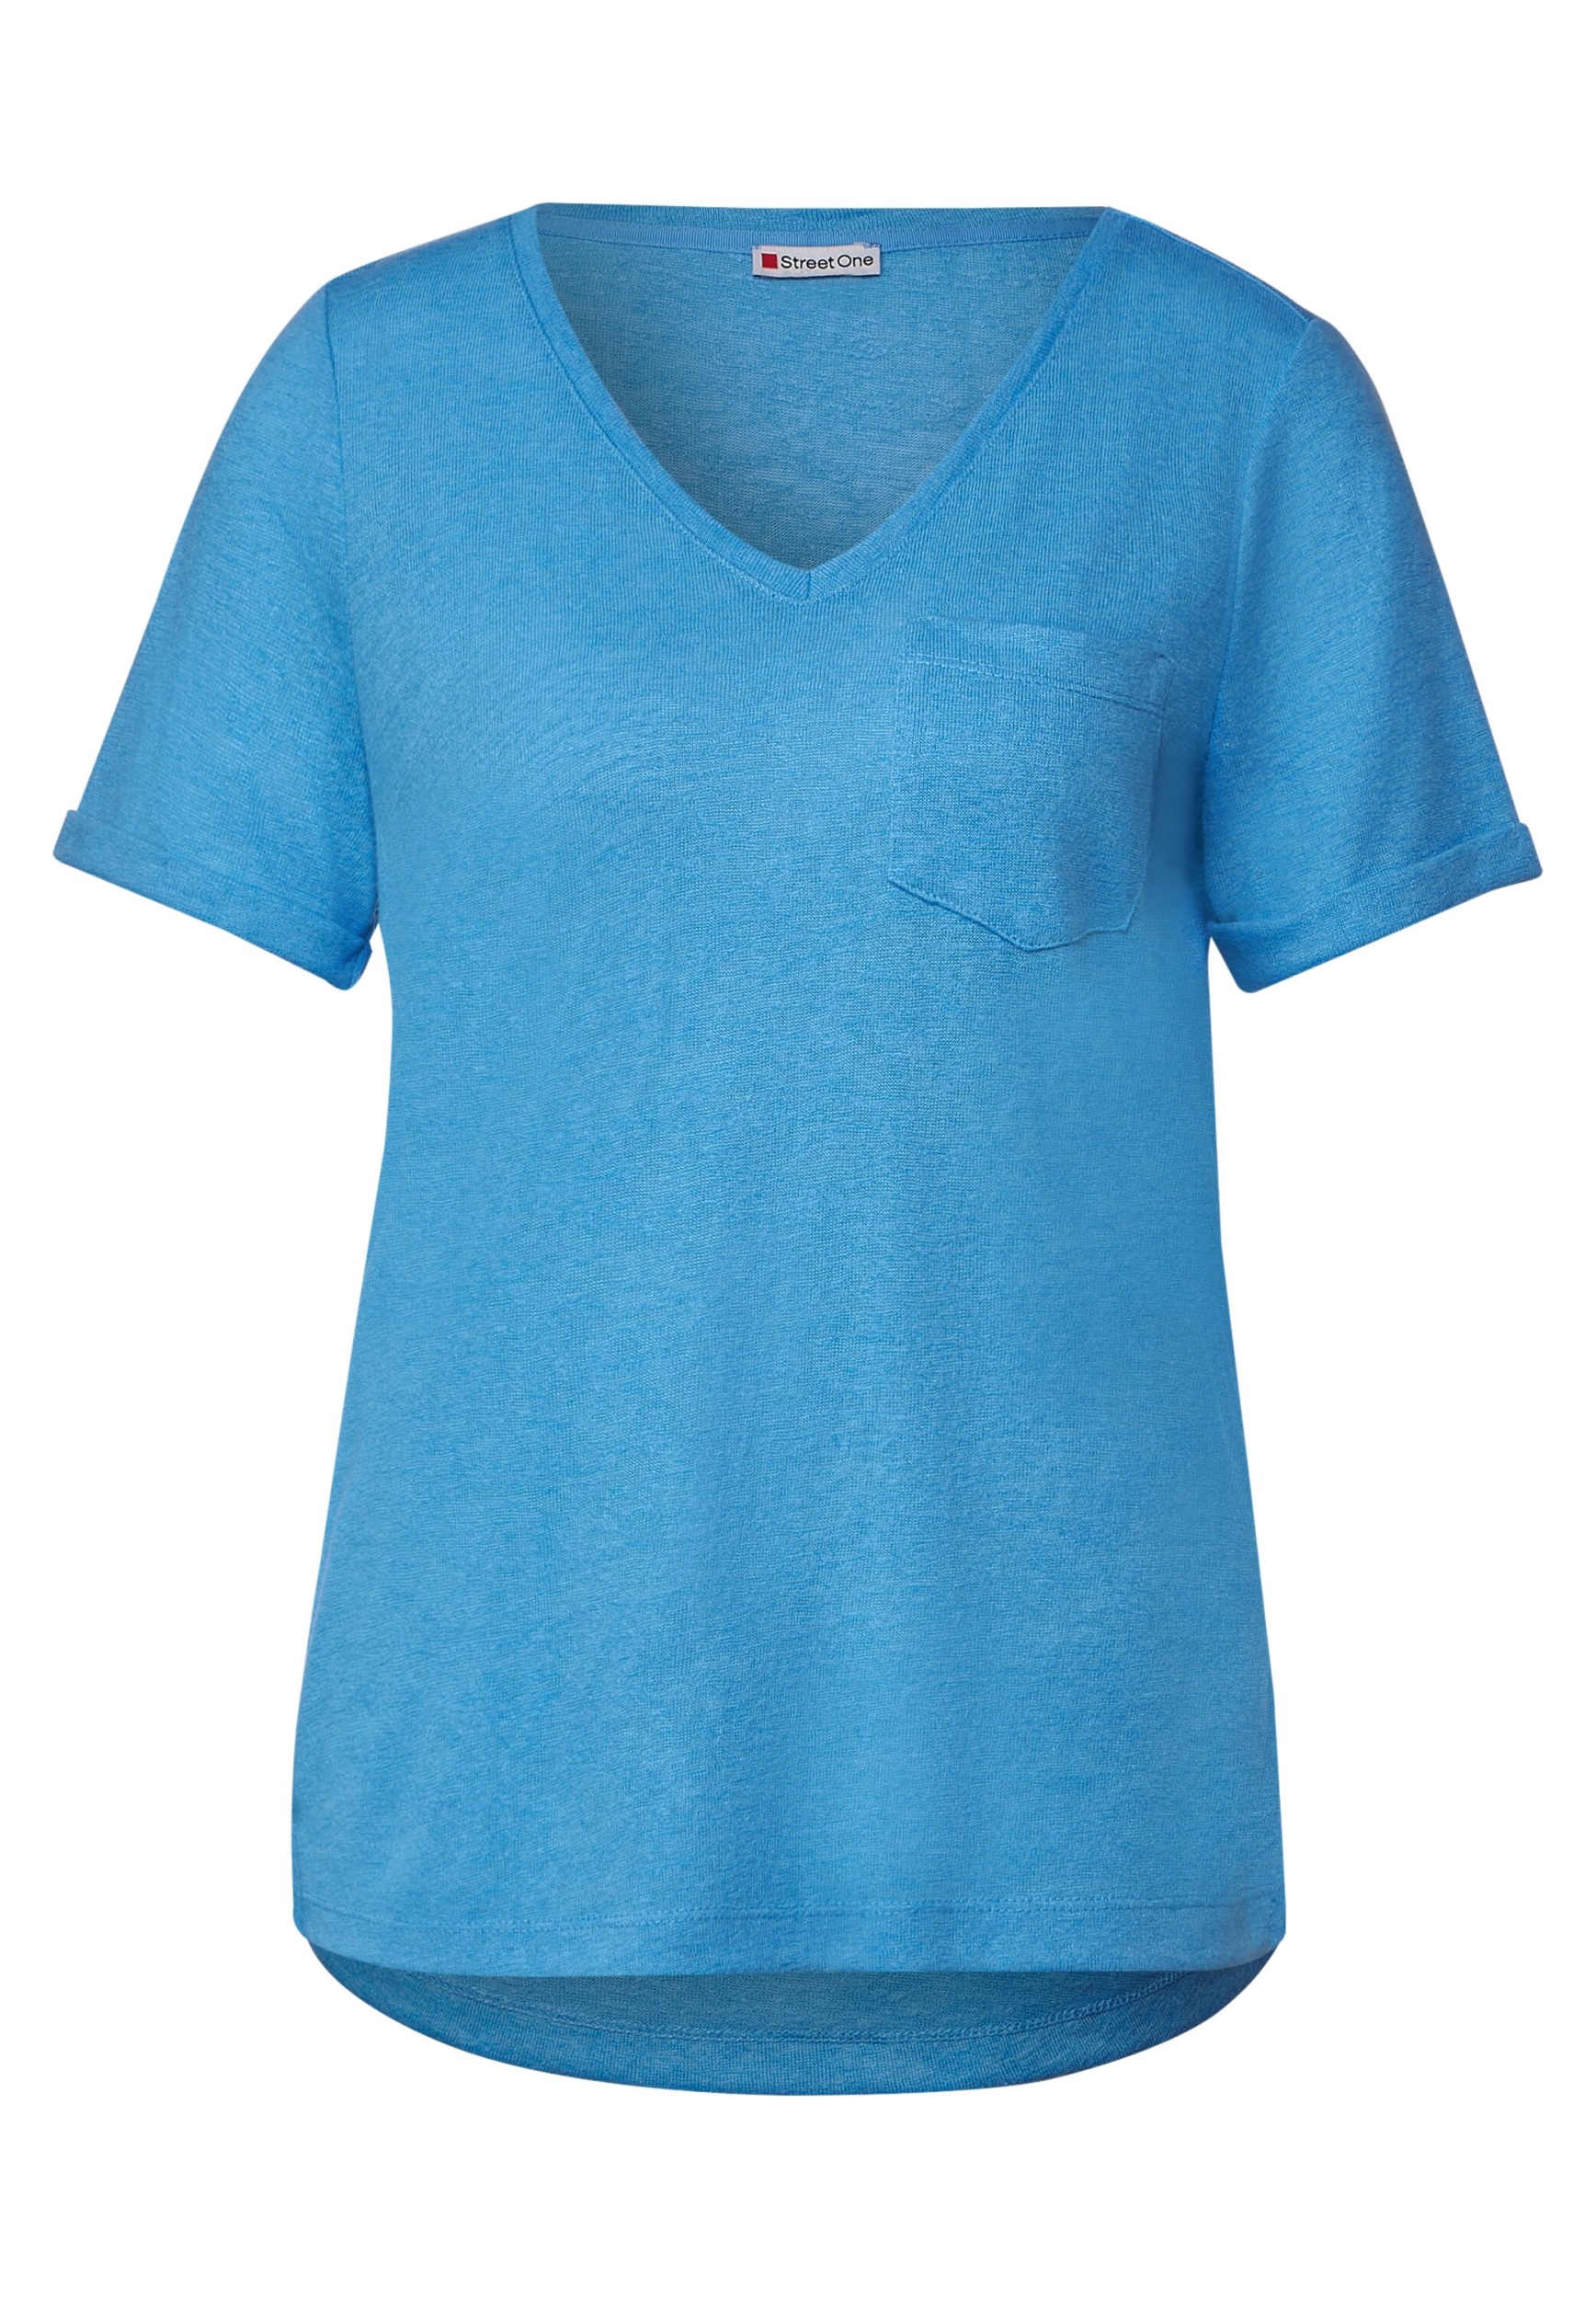 A319585-14510-40 40 QR blue | v-neck shirt LTD | look | splash linen